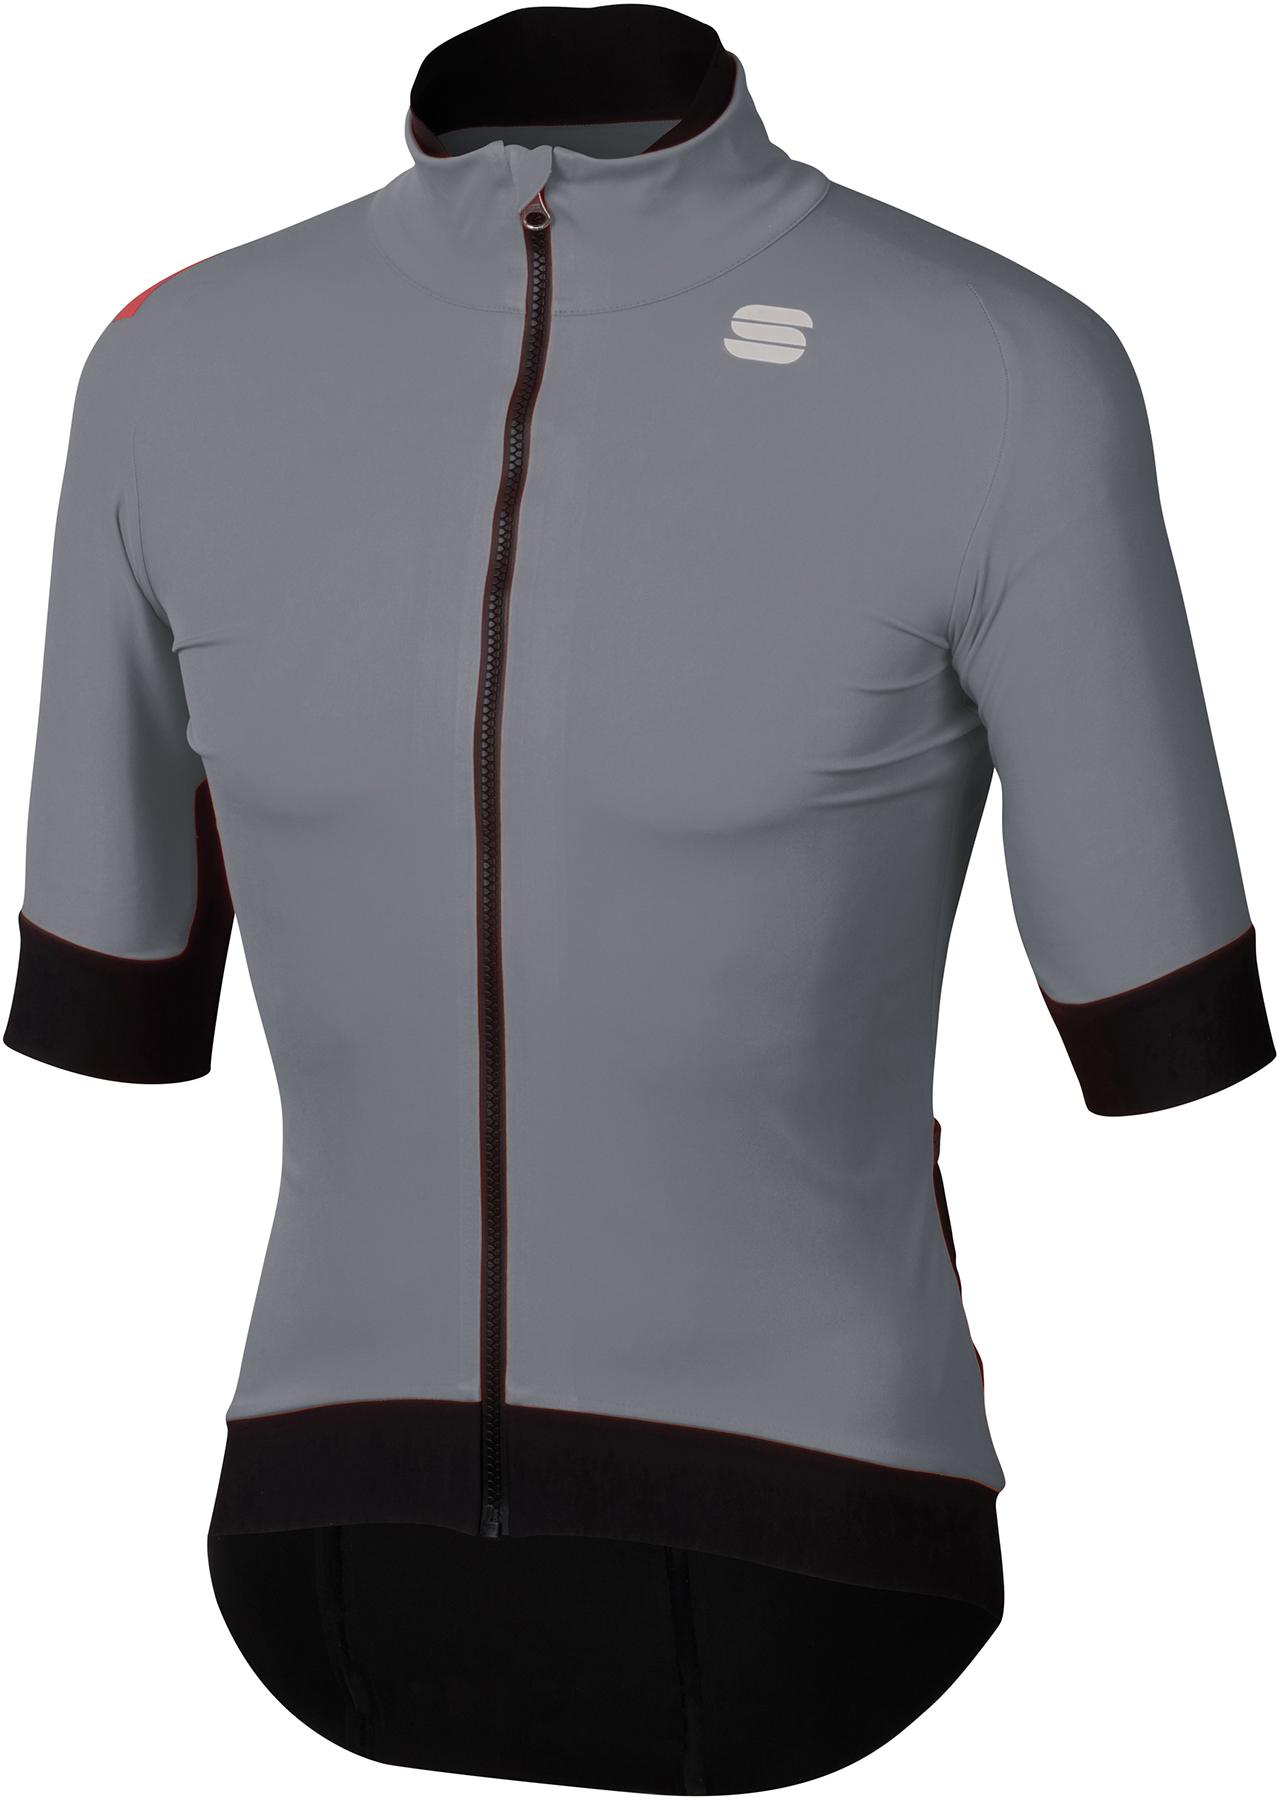 Sportful Fiandre Pro Short Sleeve Jacket - Neutral